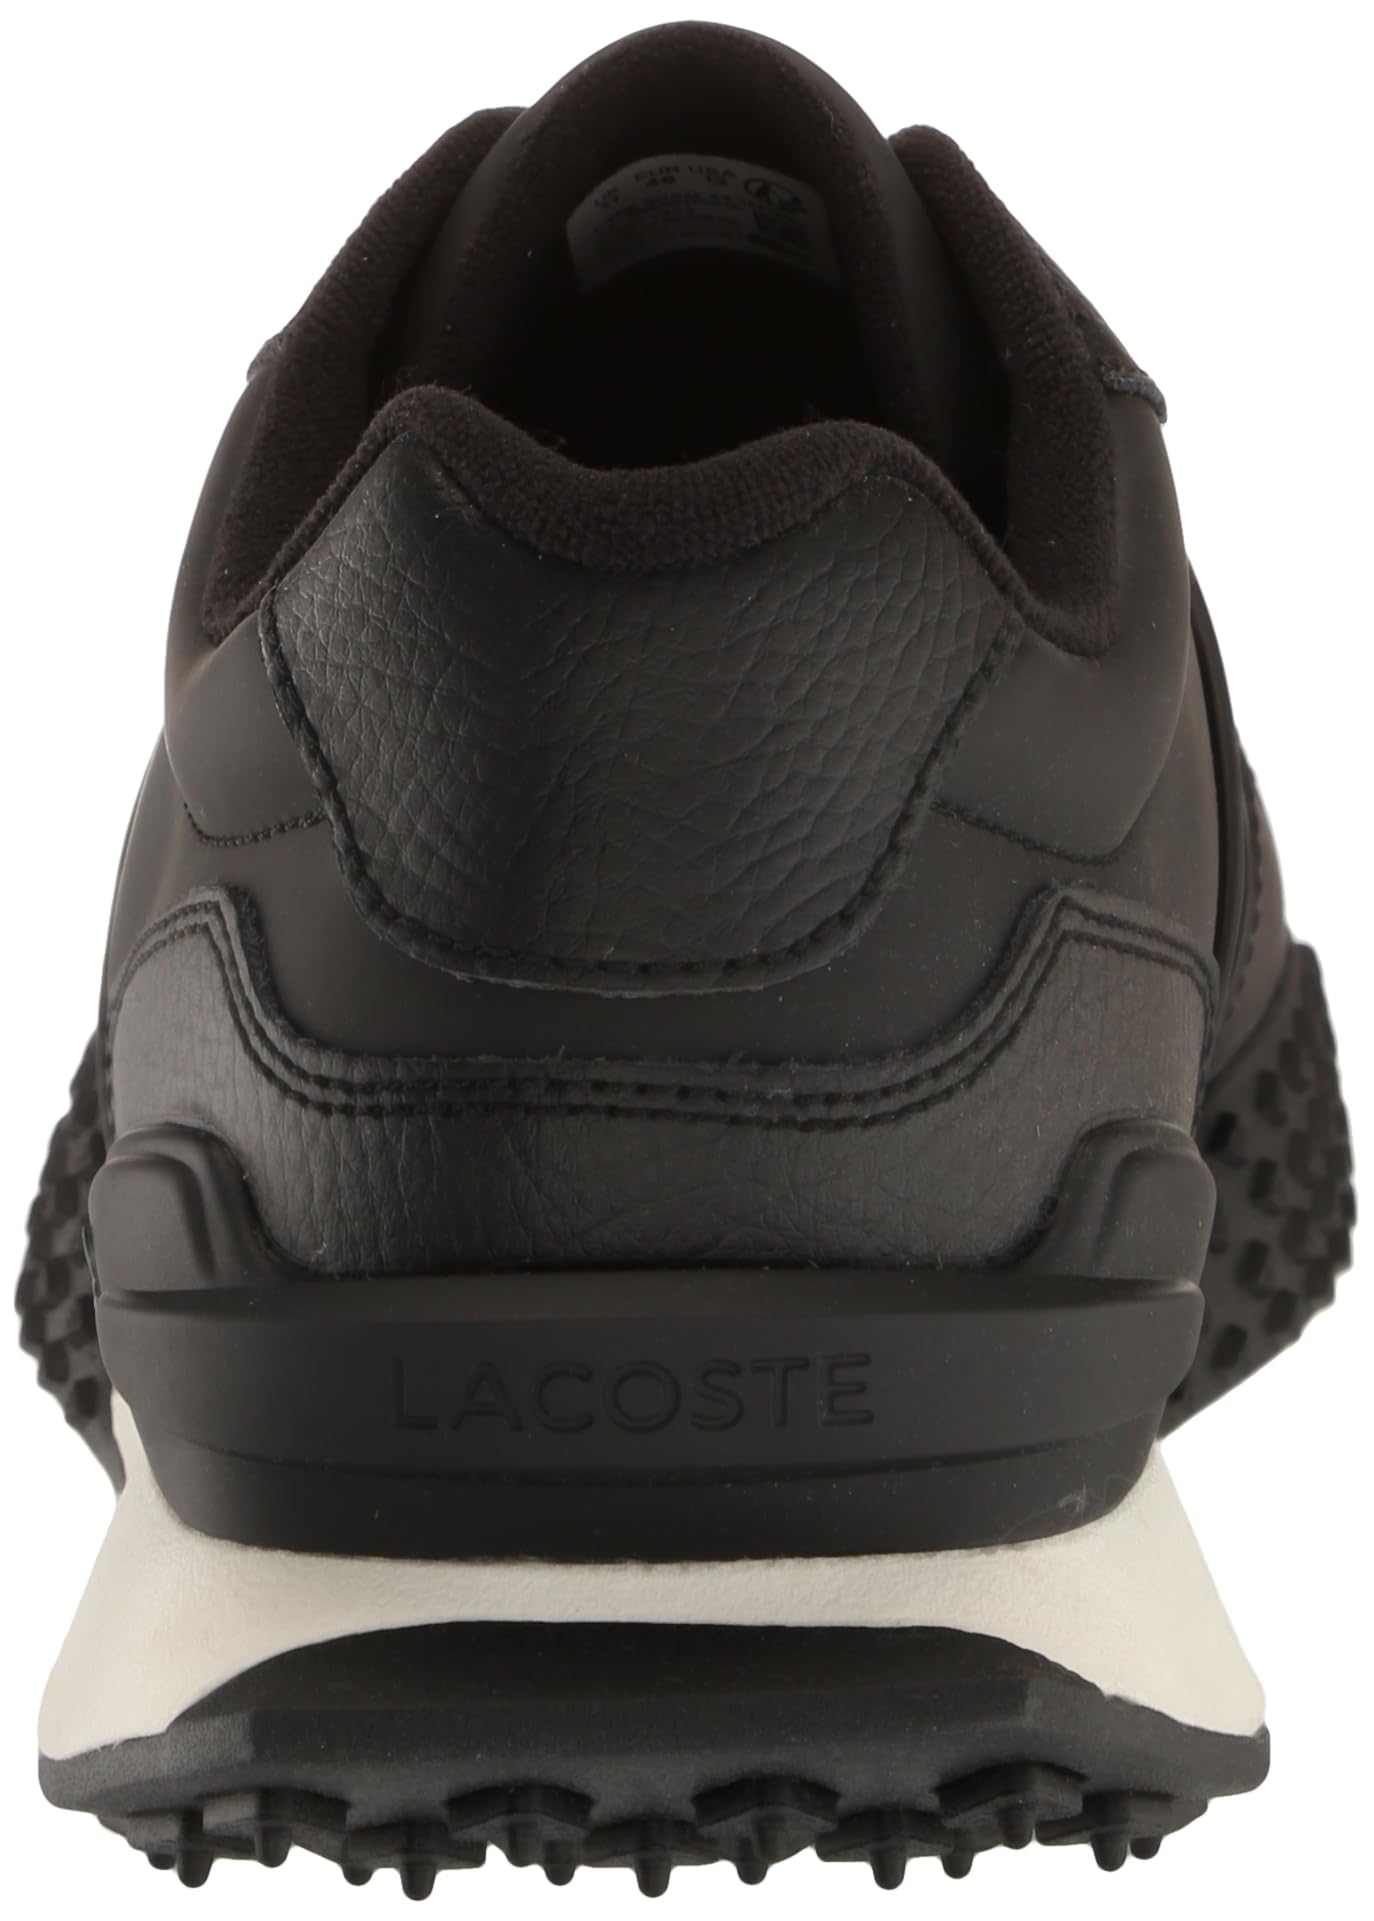 Lacoste Men's L-Spin Deluxe 2.0 1241sma Sneaker